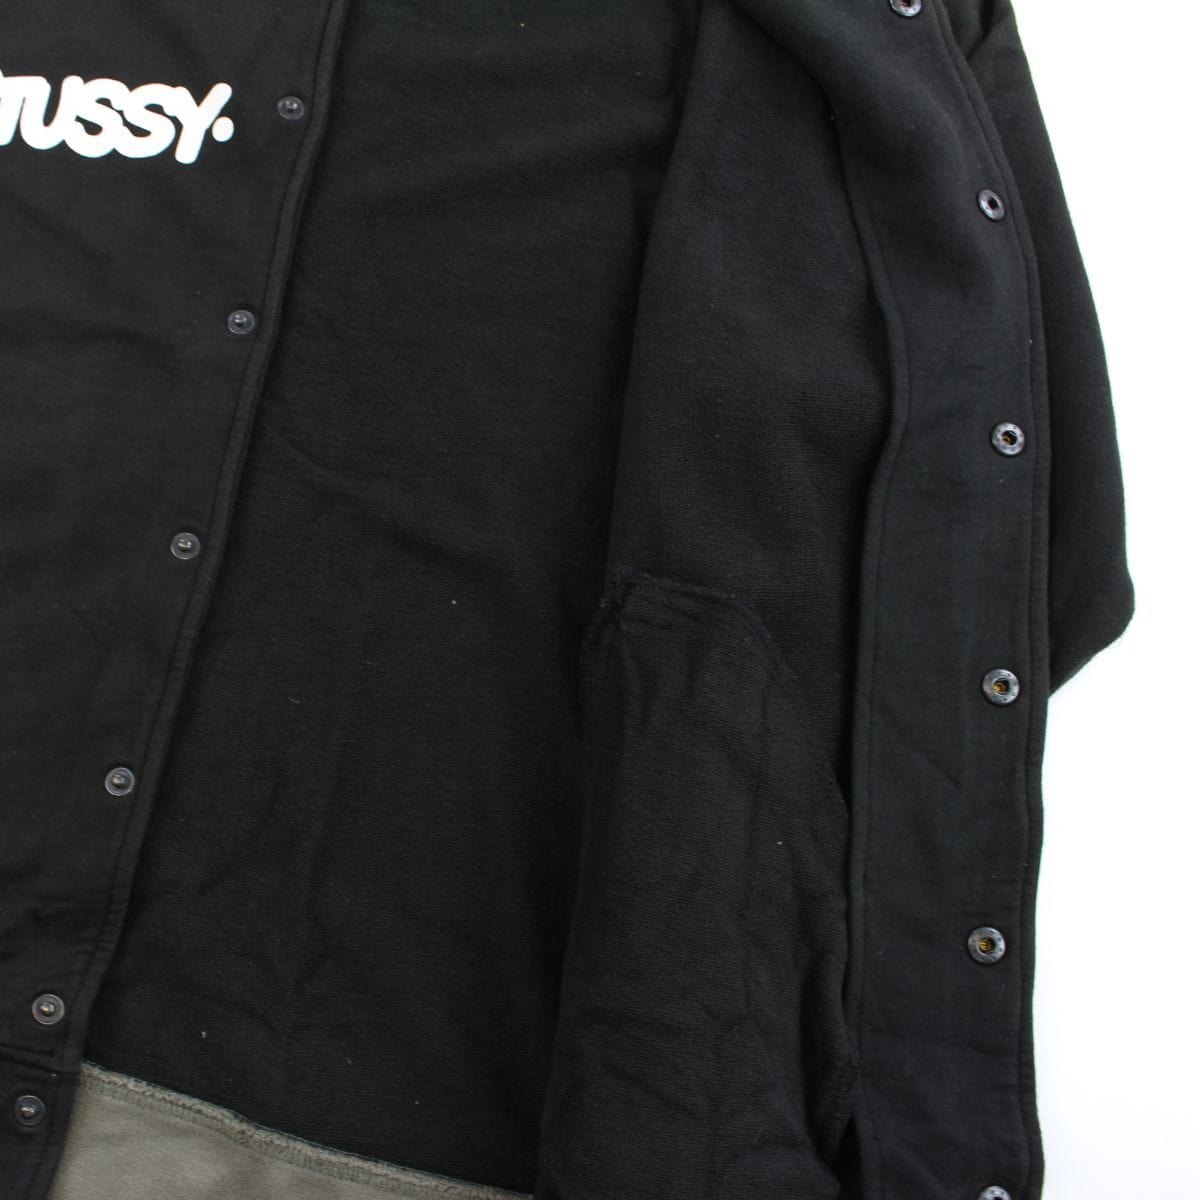 Stussy Livin Large Varsity Jacket Black - SARUUK